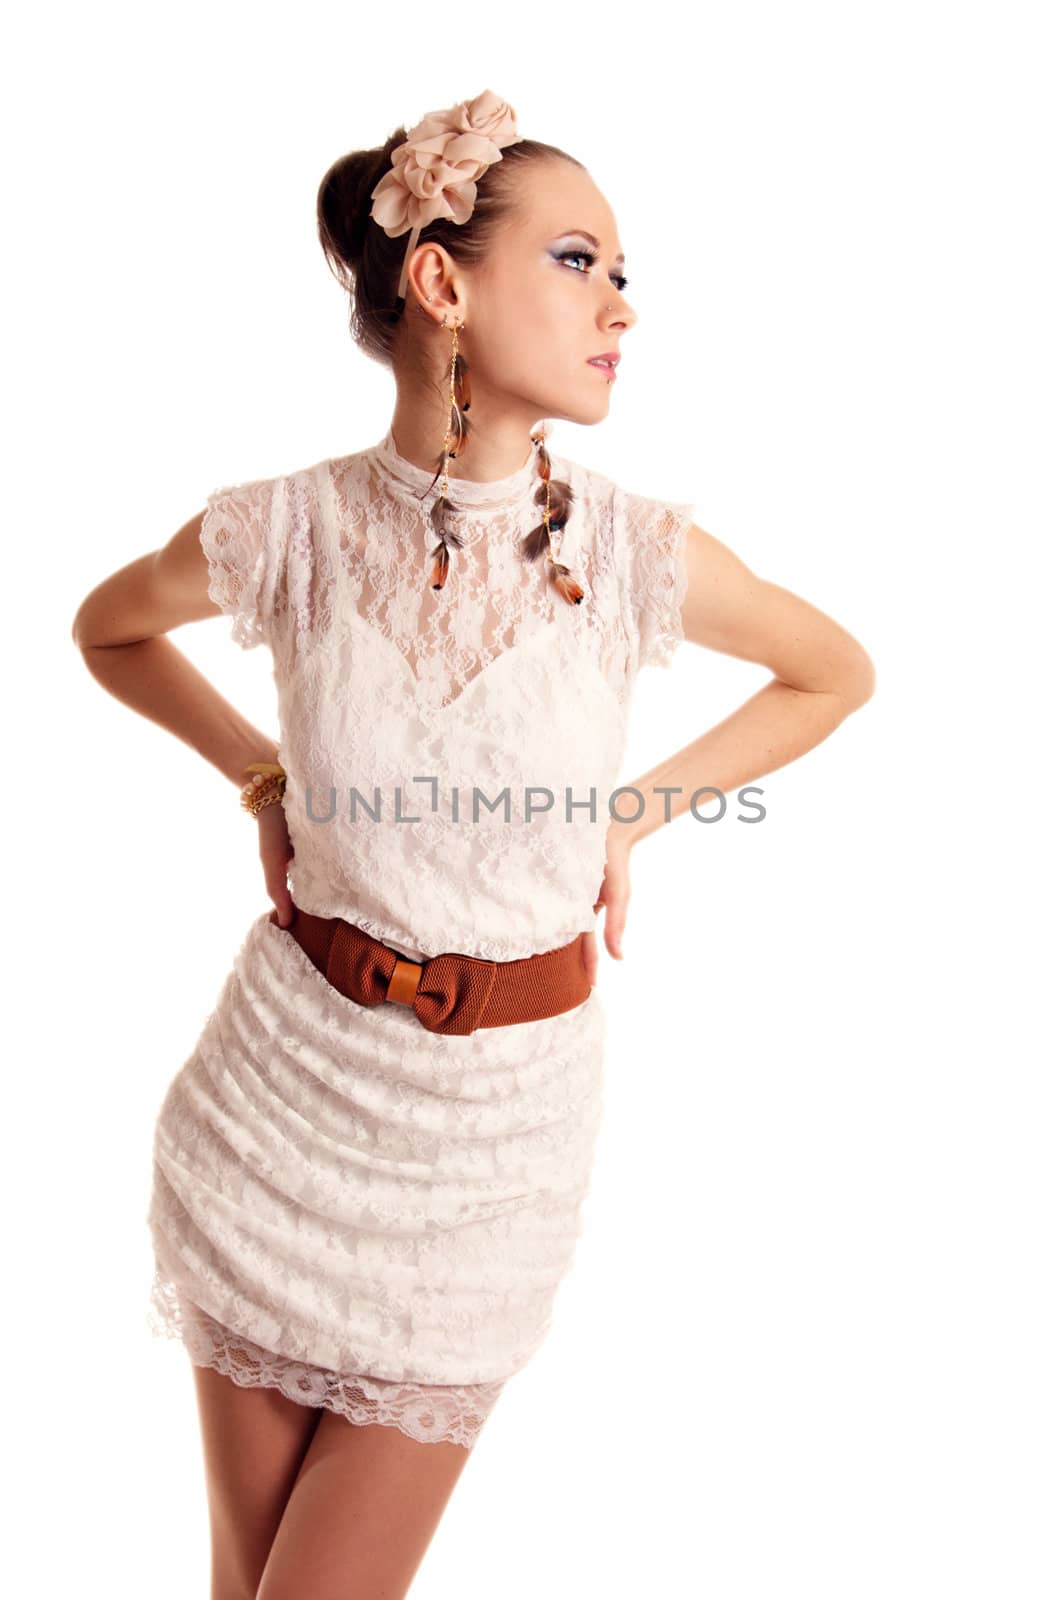 Elegant fashion style model portrait in dress over white